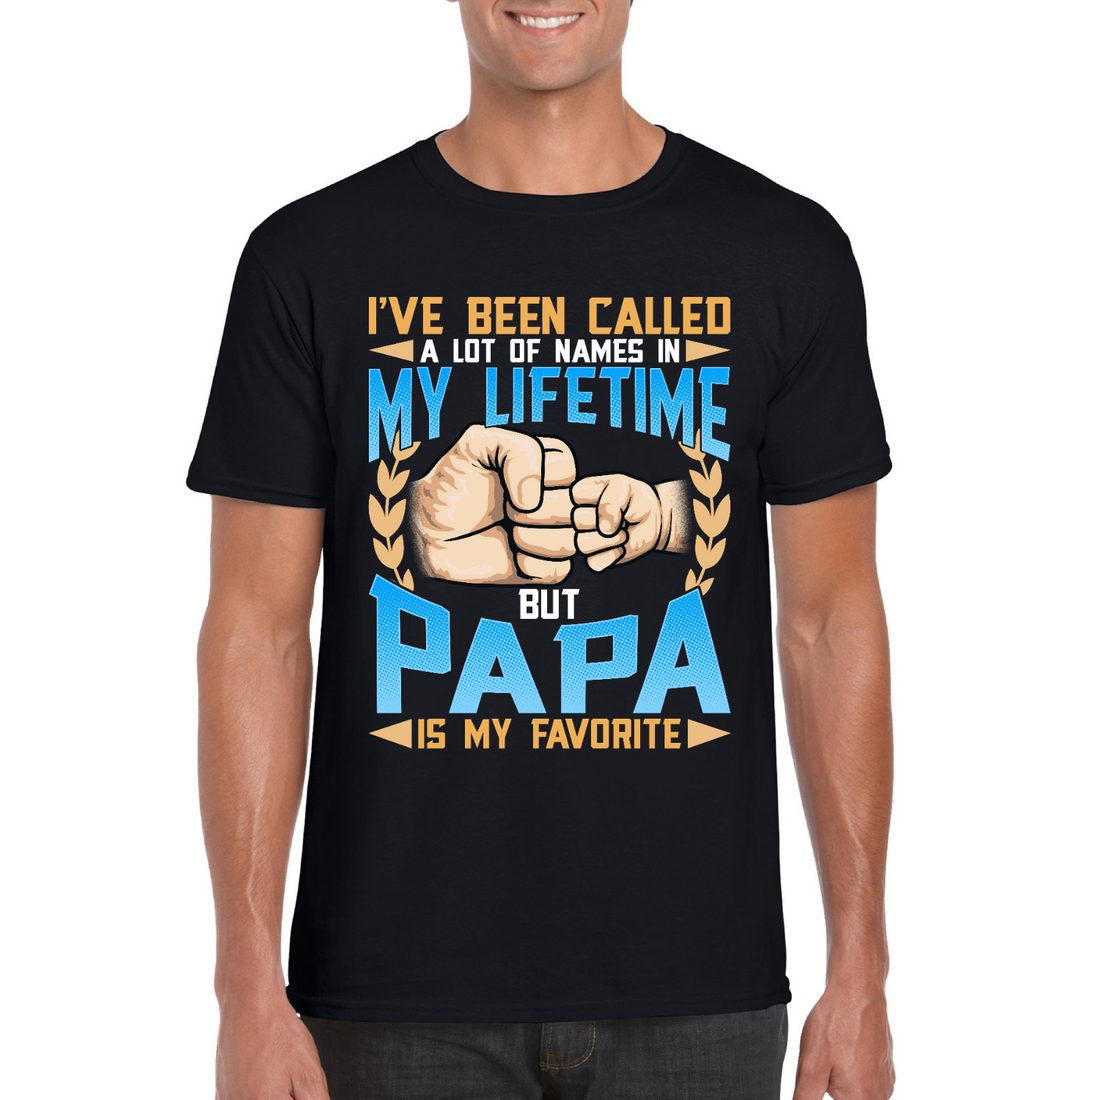 Papa | Black Tee Shirt